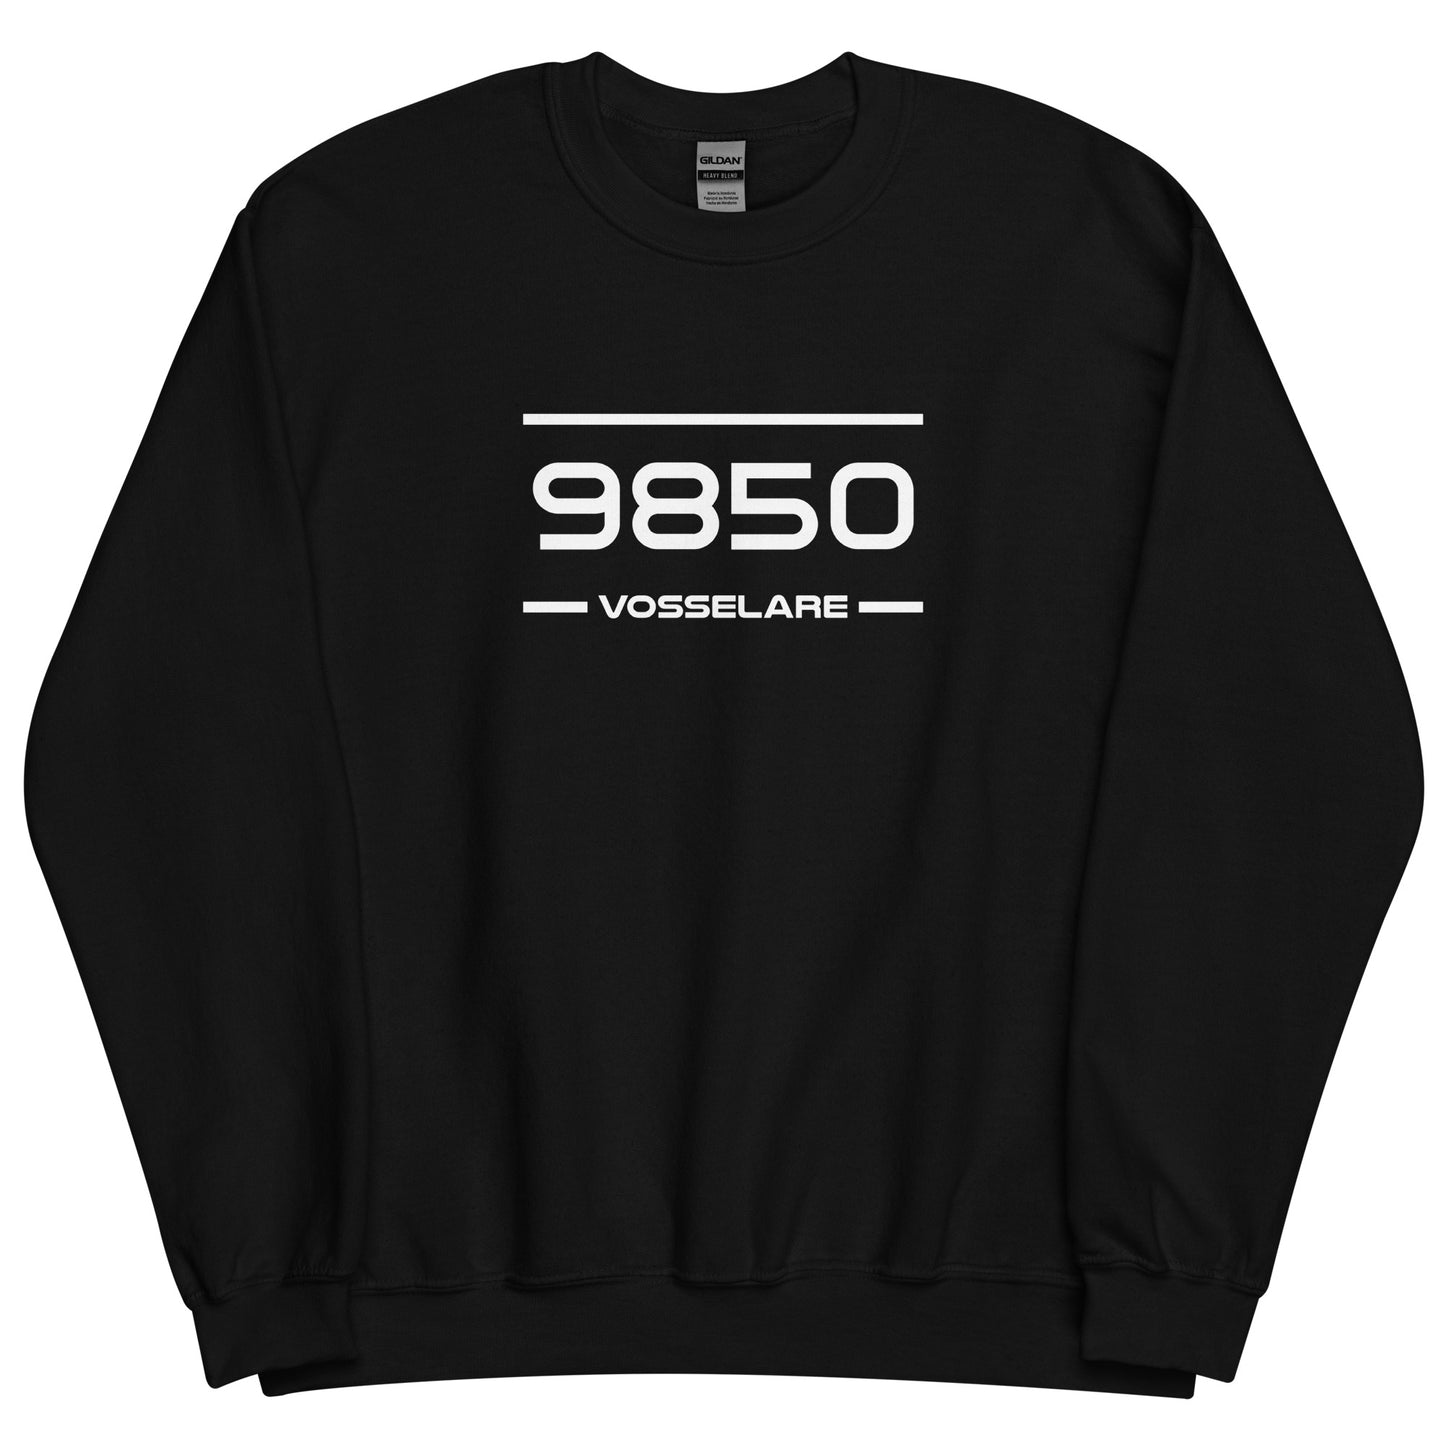 Sweater - 9850 - Vosselare (M/V)